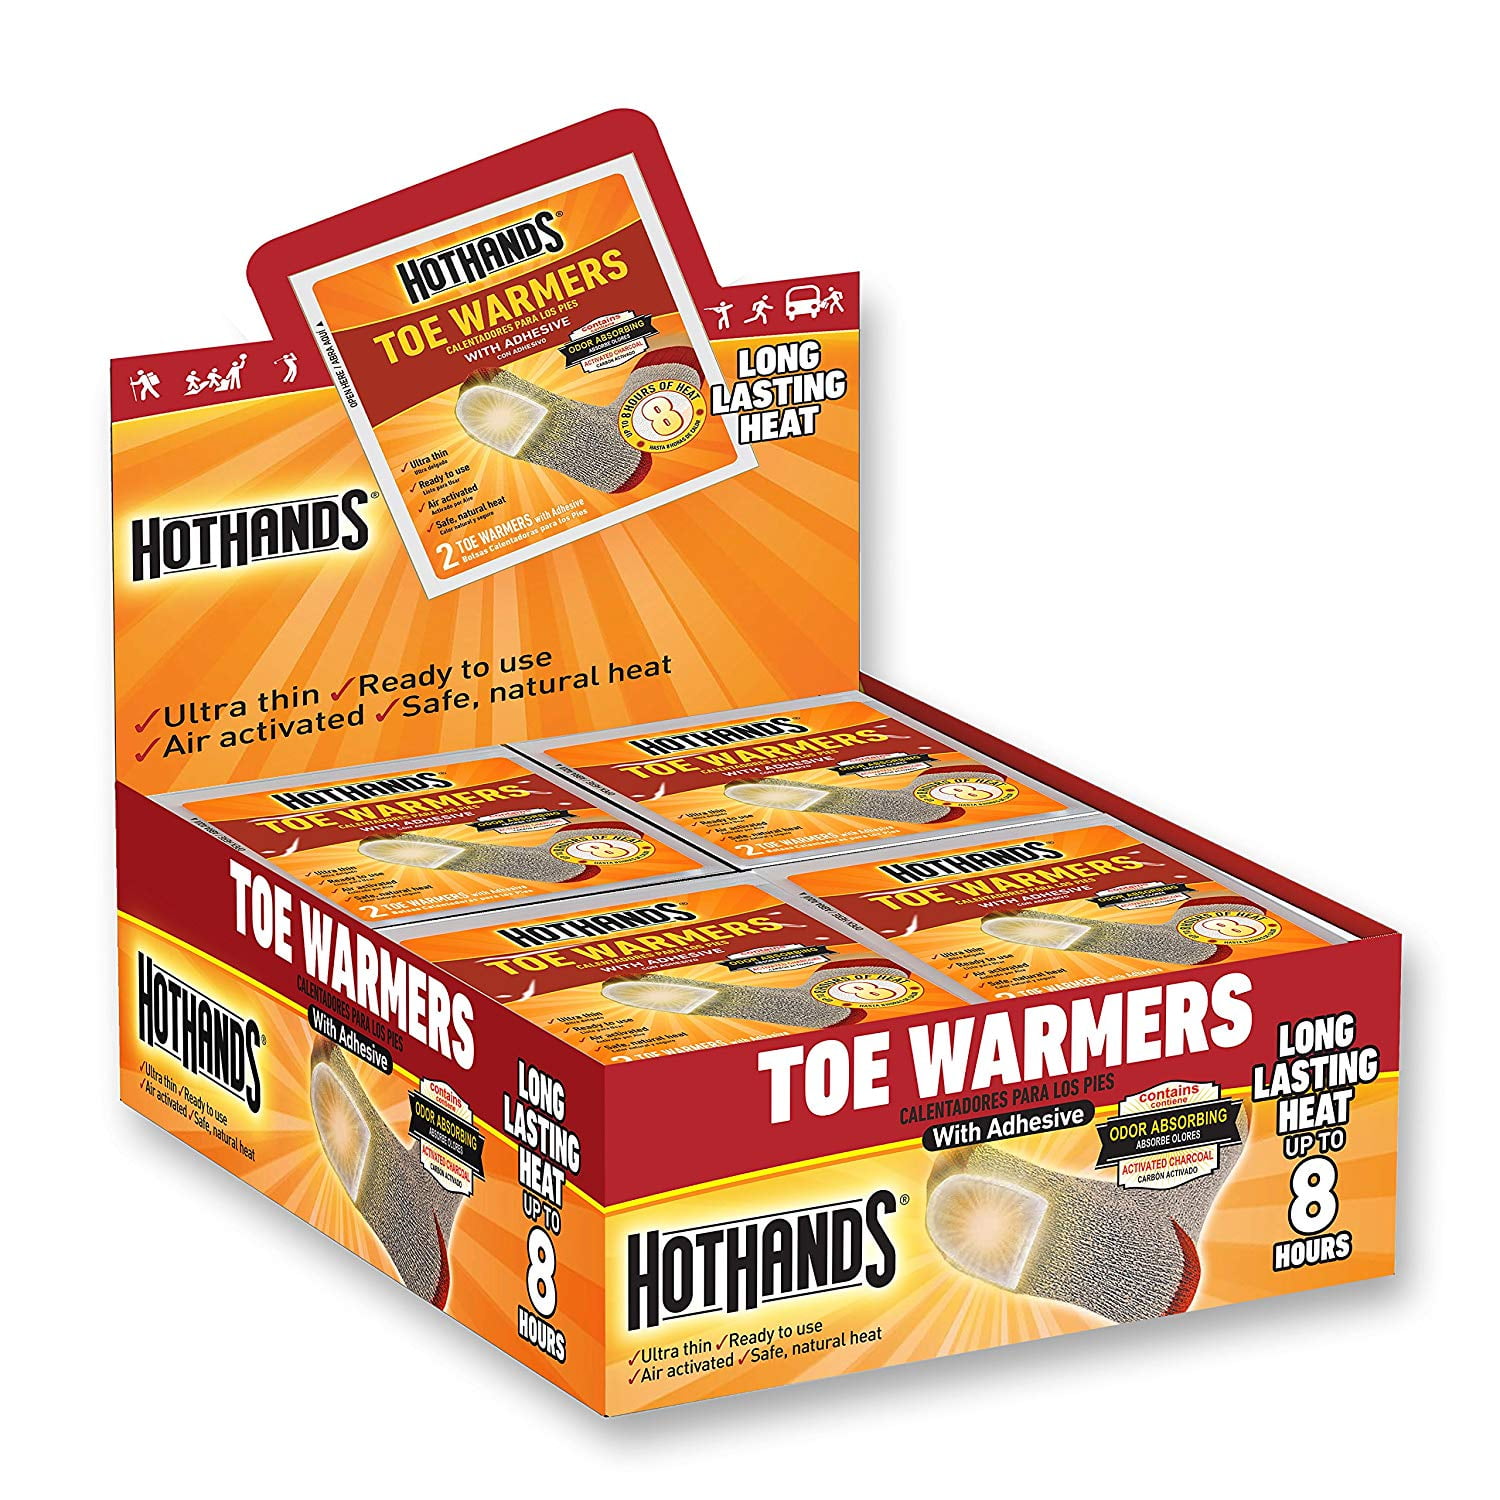 Retail Packs Of 7 Pairs TT7PRPK 56 Total Pairs!HotHands Toe Warmers Exp 7/22 4 